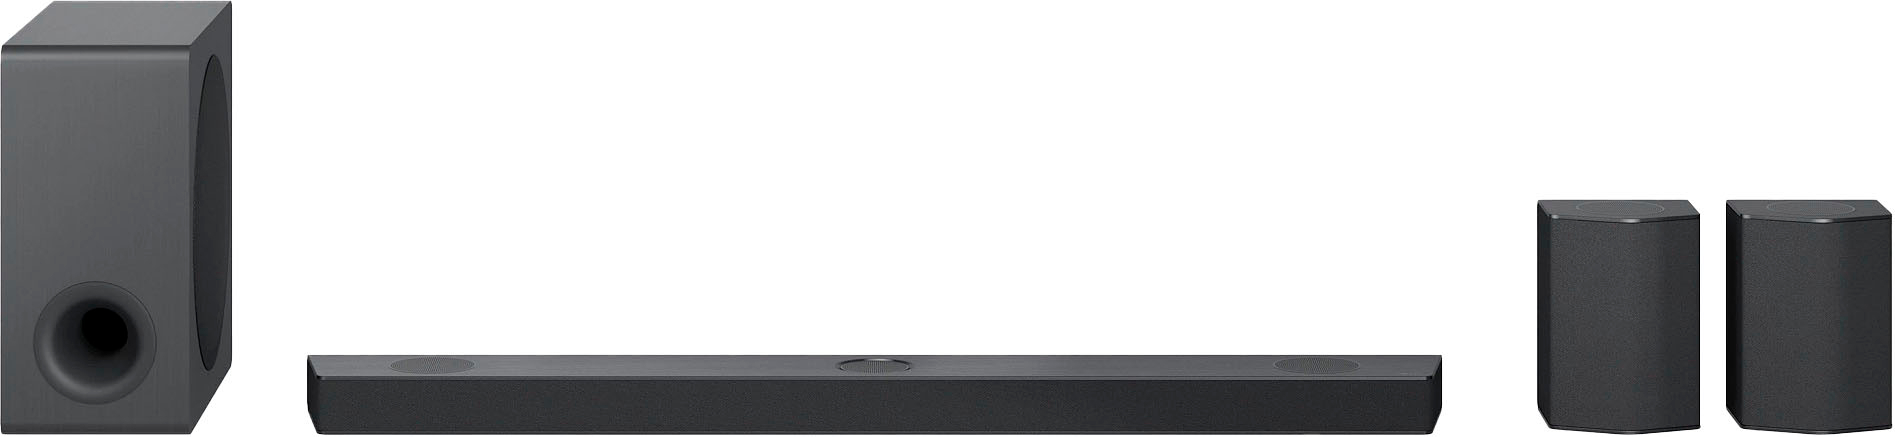 LG S95QR - Potencia 810W - AI Sound Pro - IMAX Enhanced